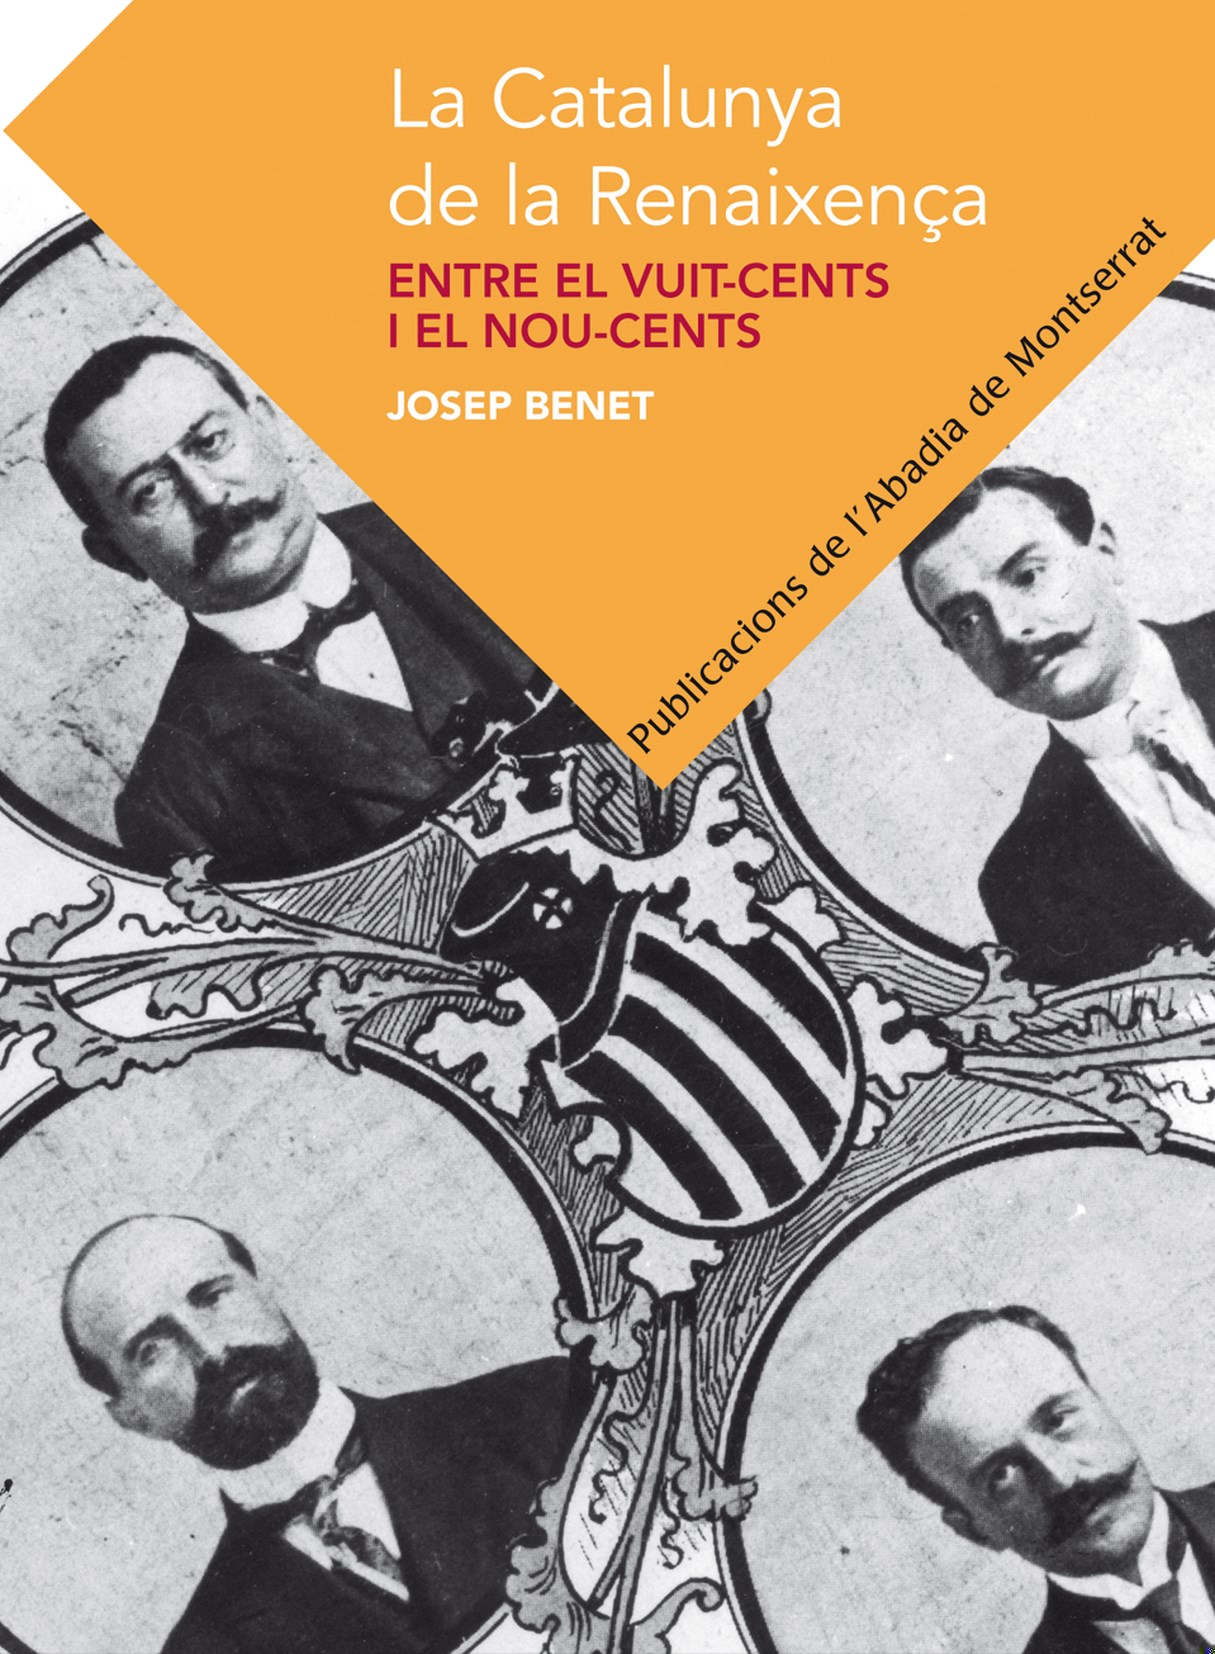 Josep Benet i Morell